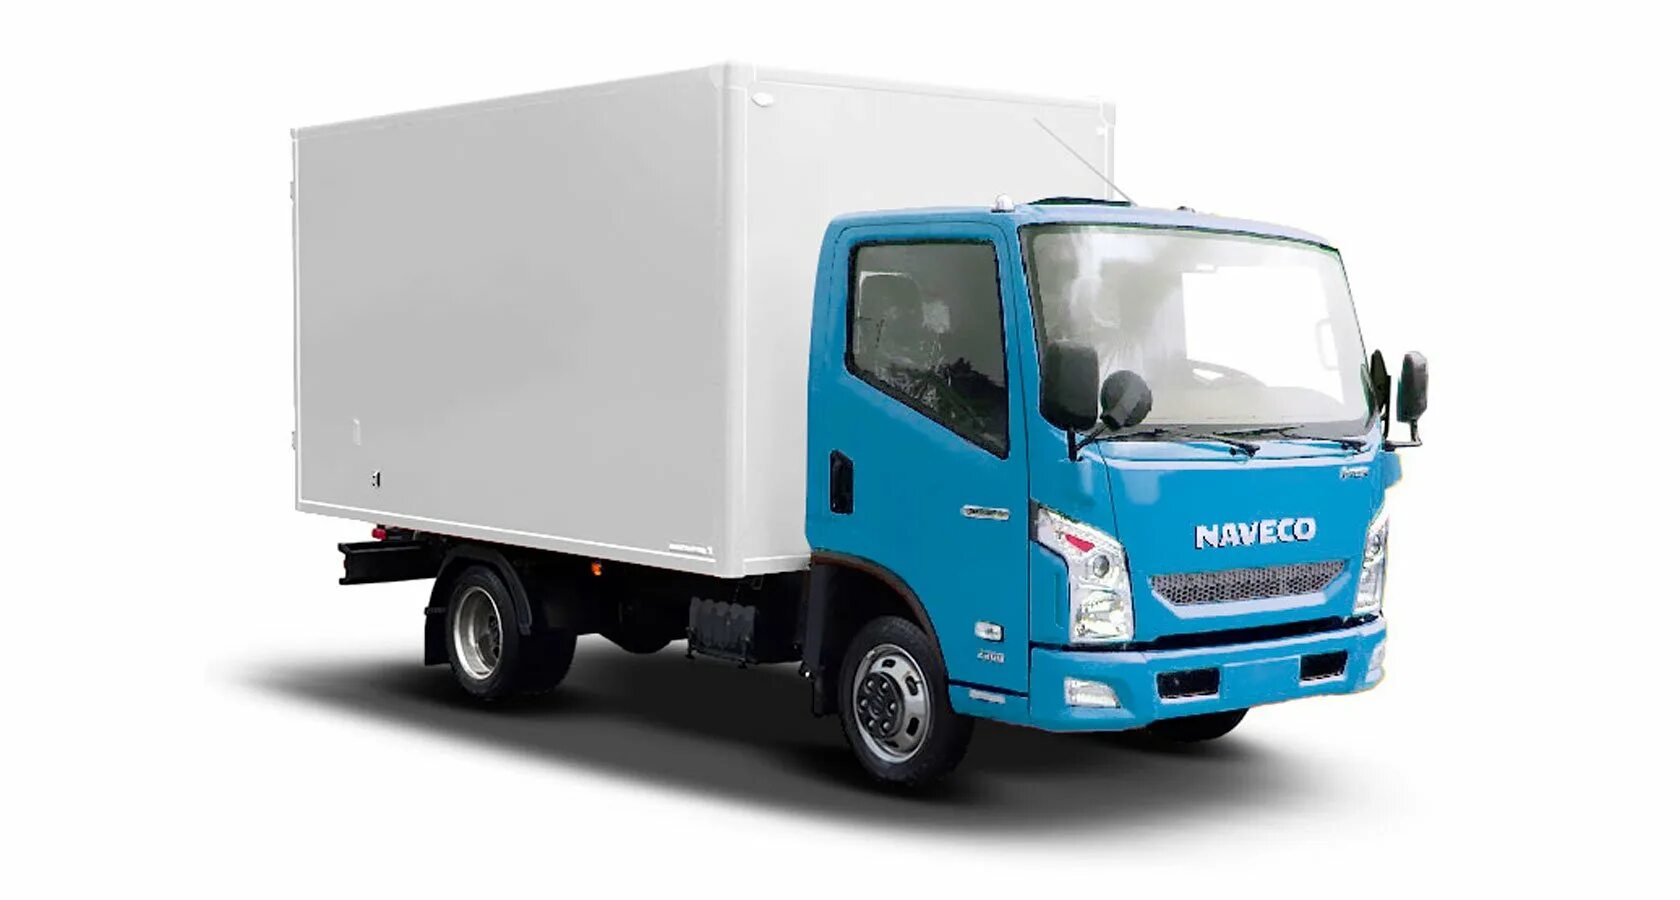 Автомобиль грузоподъемностью 1 тонна. Грузовик Naveco c300. Hyundai 72, фургон 3,5т. Фотон бортовой 5 тонн. Грузовик Навеко 3 тонн.